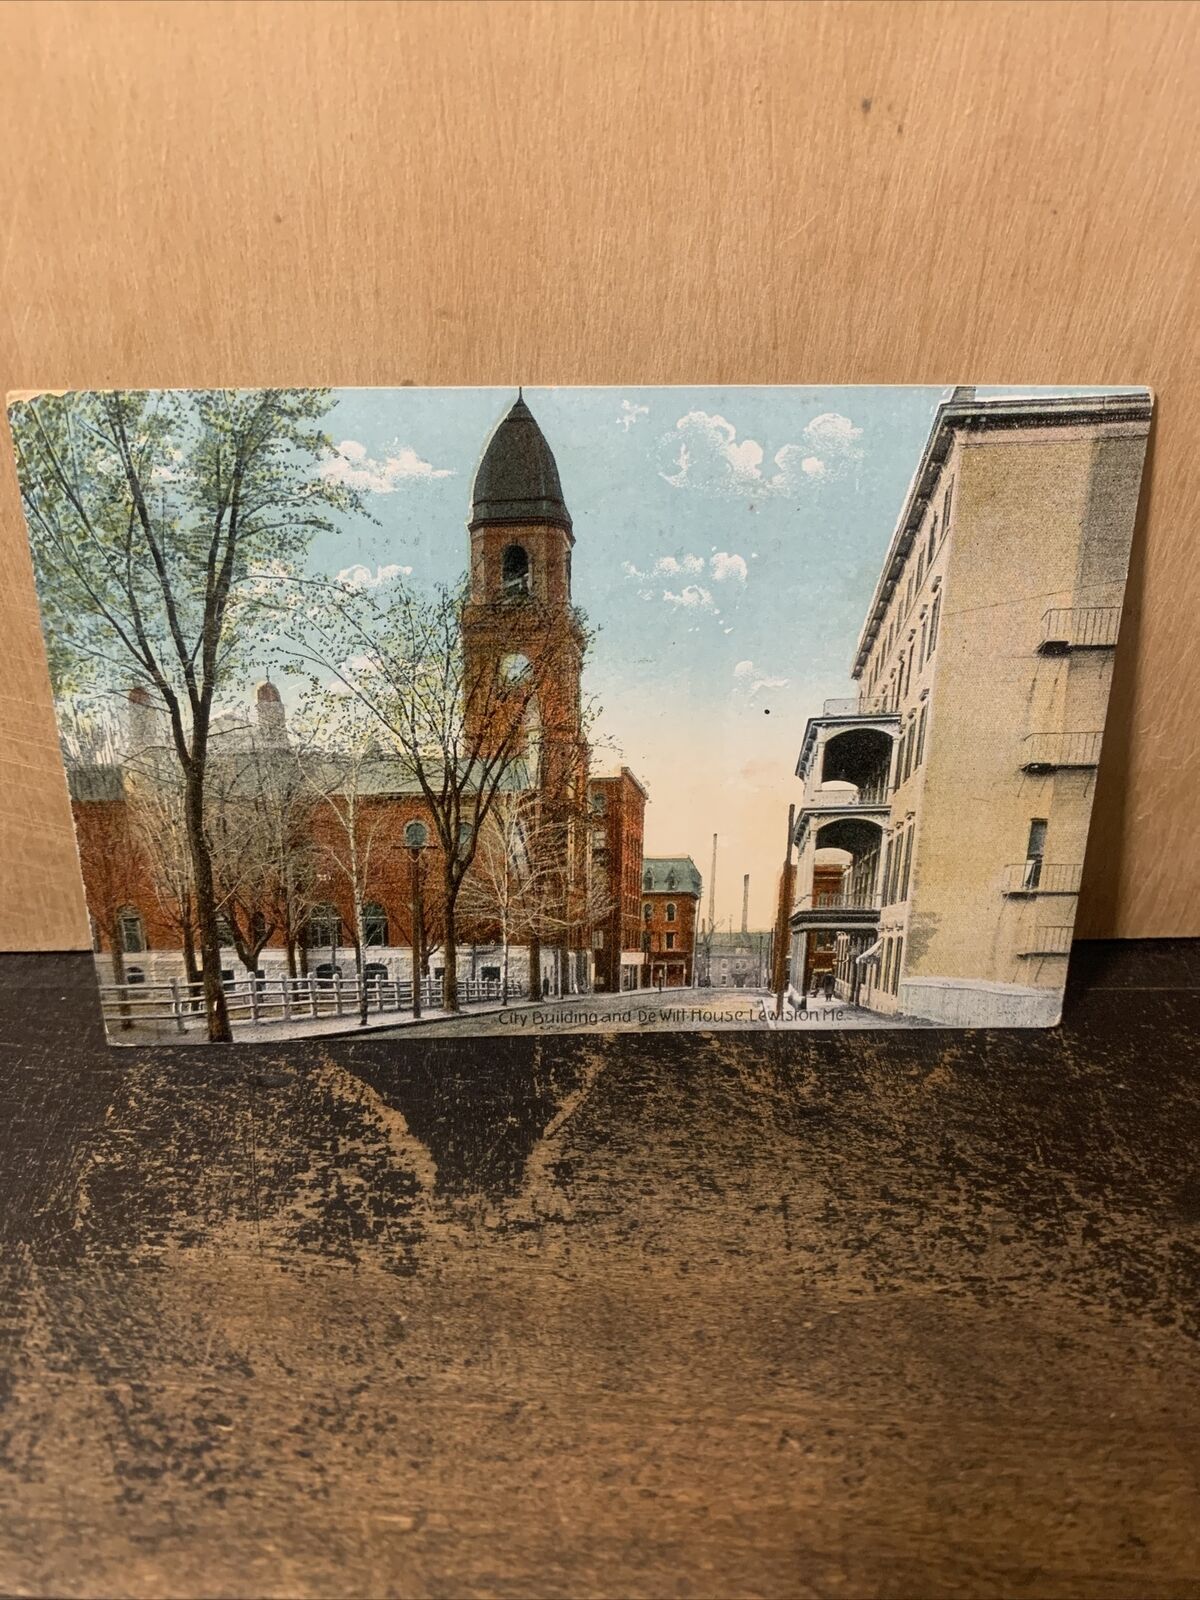 City building & Dewitt House,￼Maine￼ -Postcard-￼ 1911